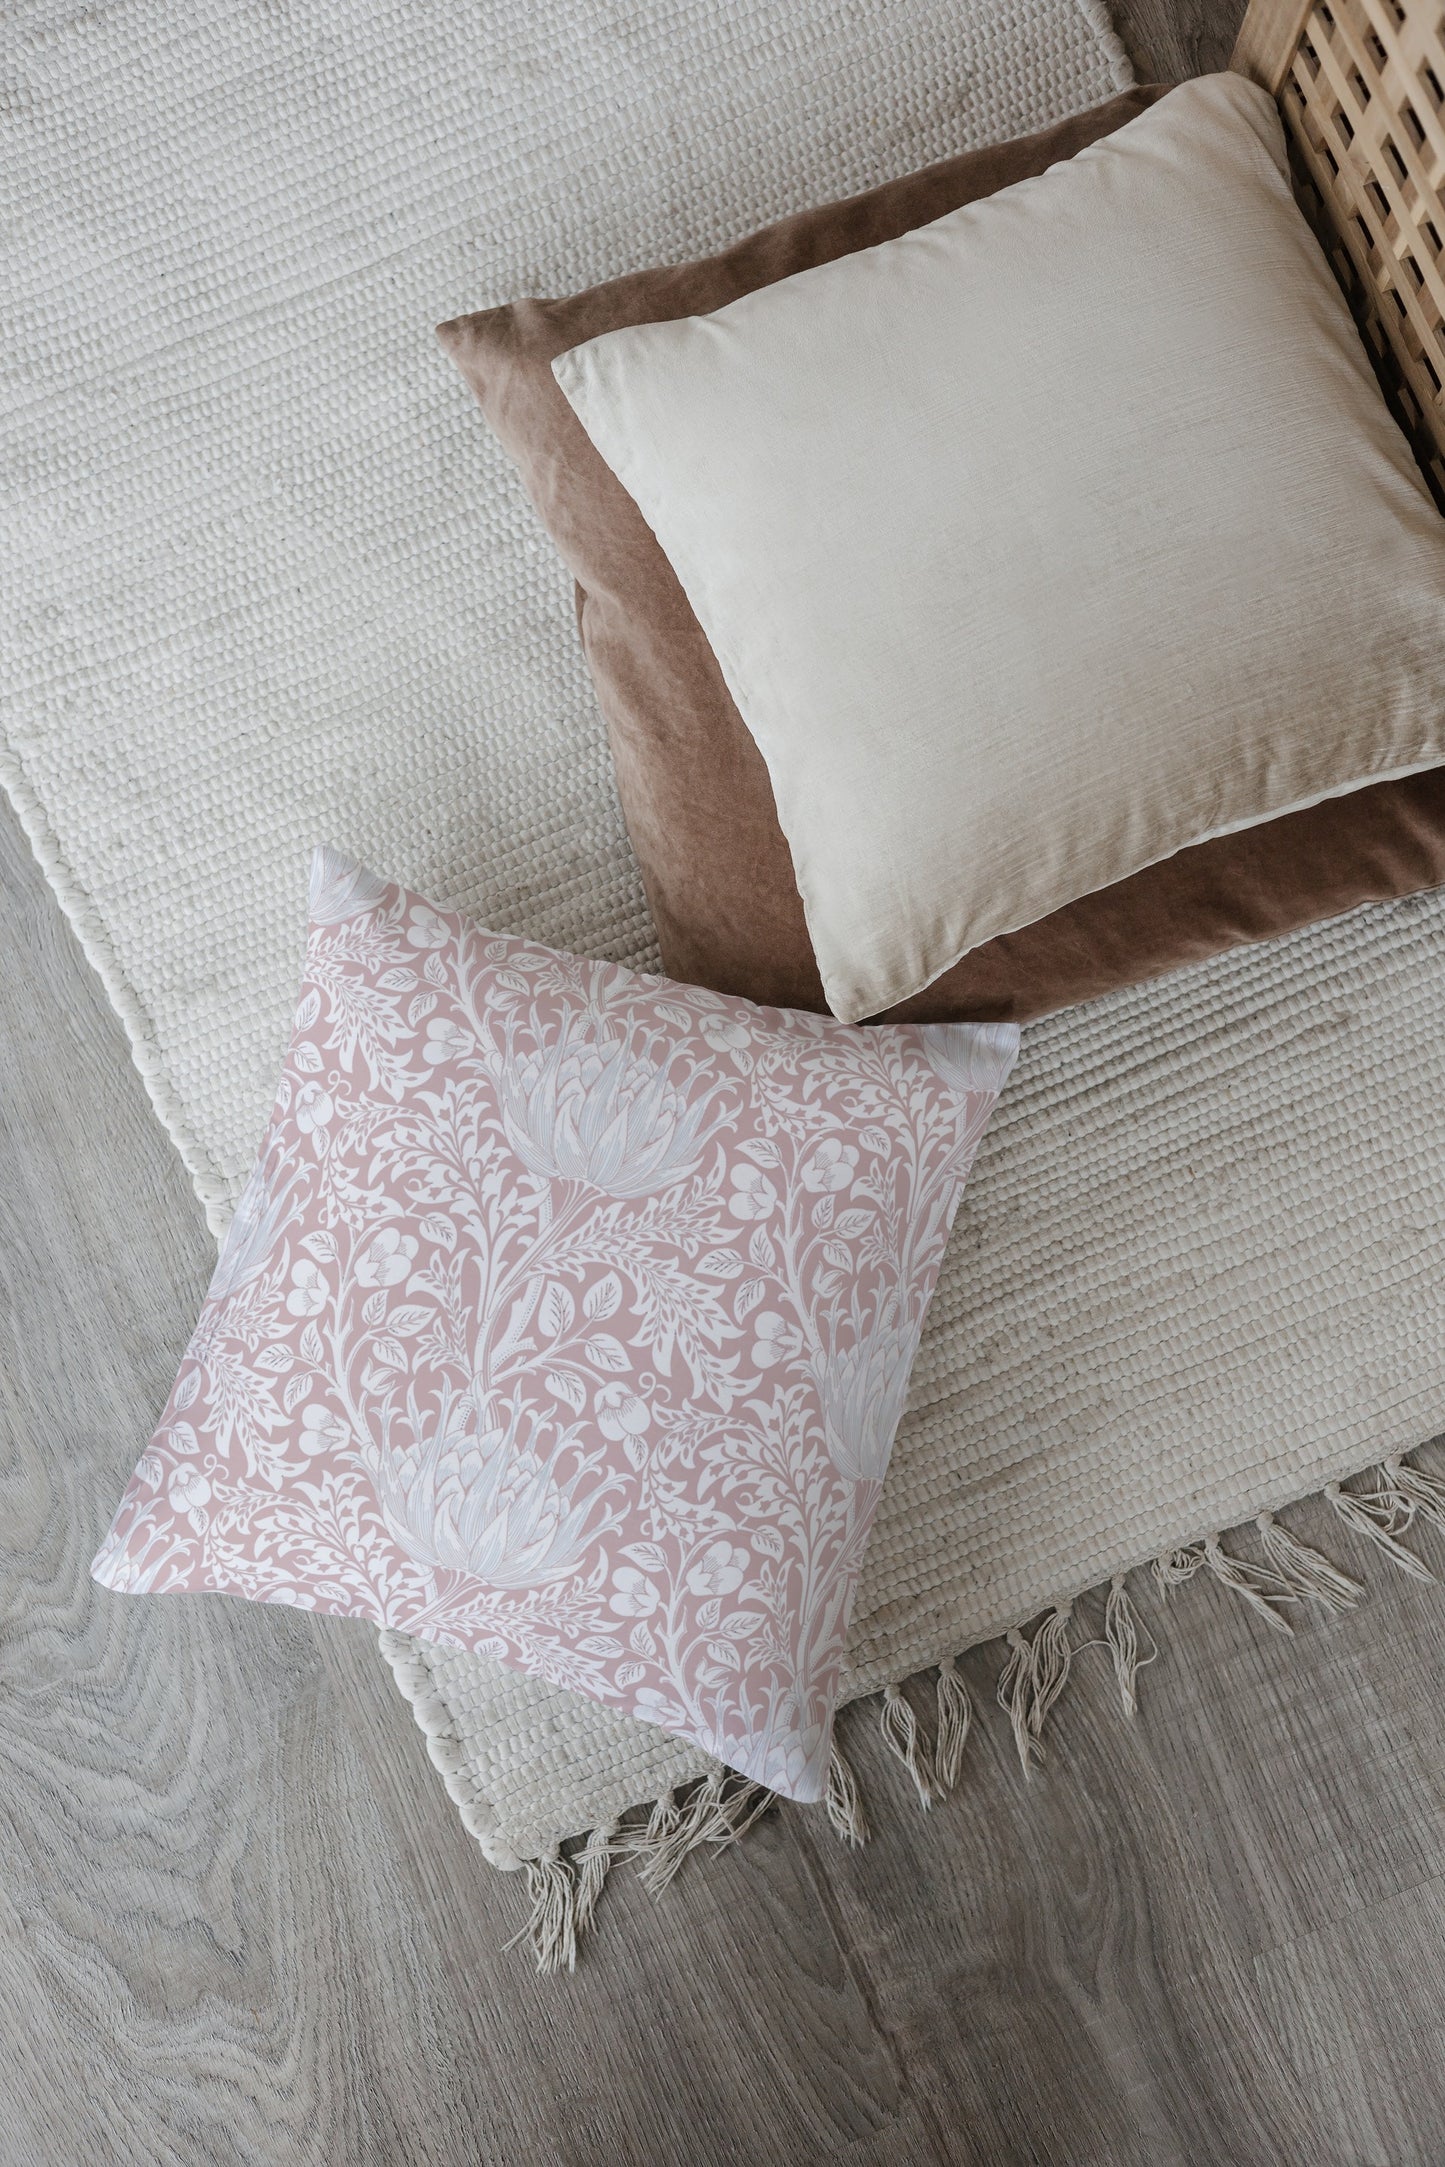 William Morris Cotton Pillows Artichoke Rose Blush